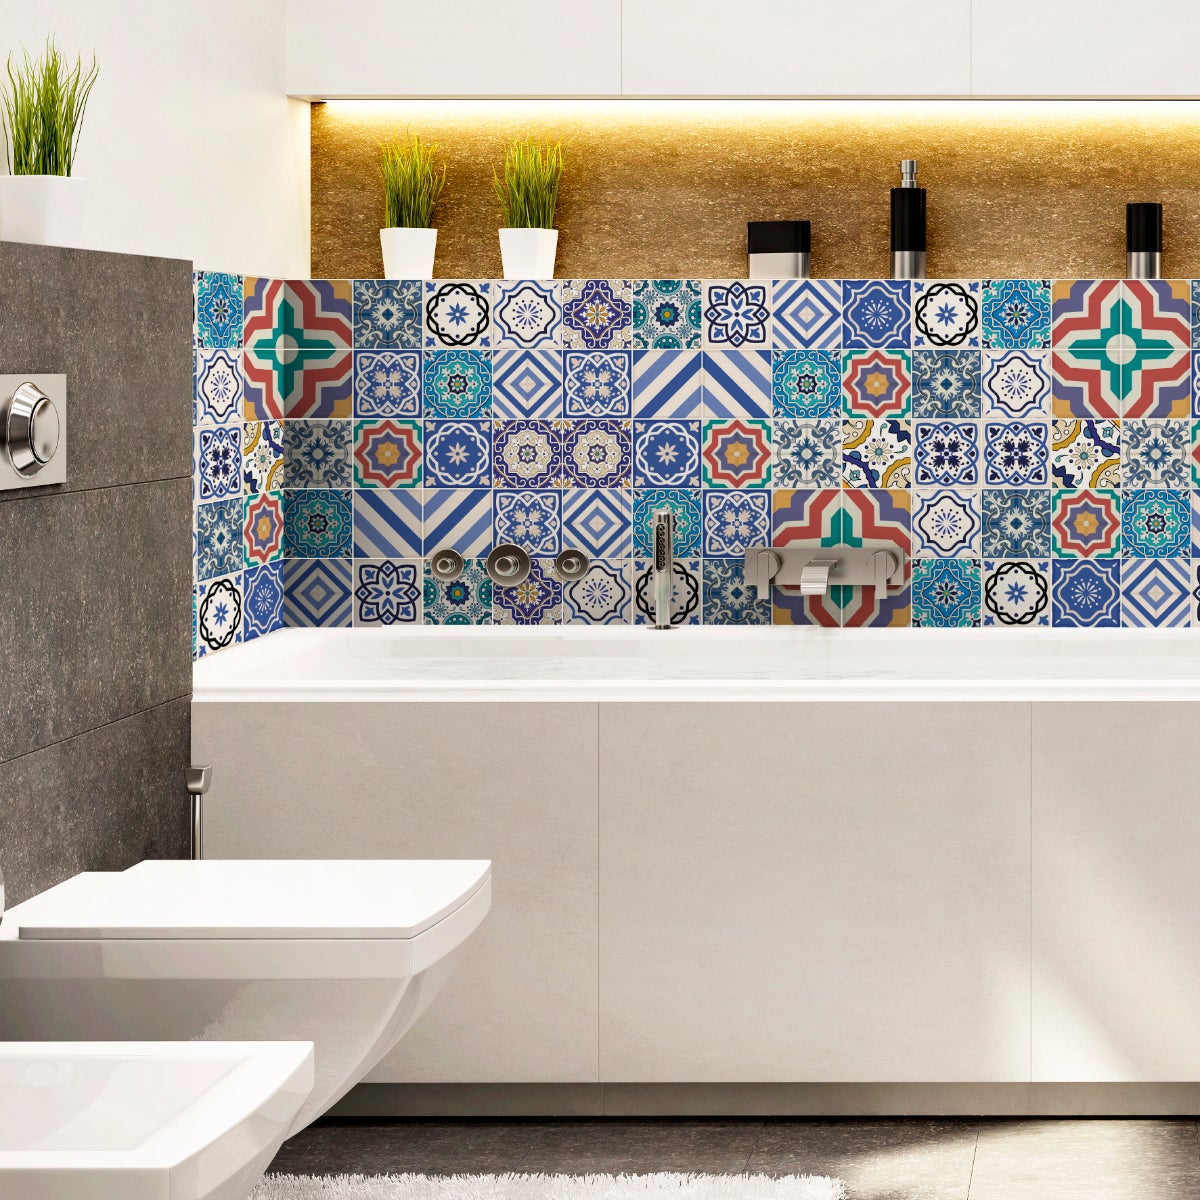 30 vinilo baldosas azulejos Elettra - adhesivo de pared - revestimiento  sticker mural decorativo - 100x120cm-30stickers20x20cm